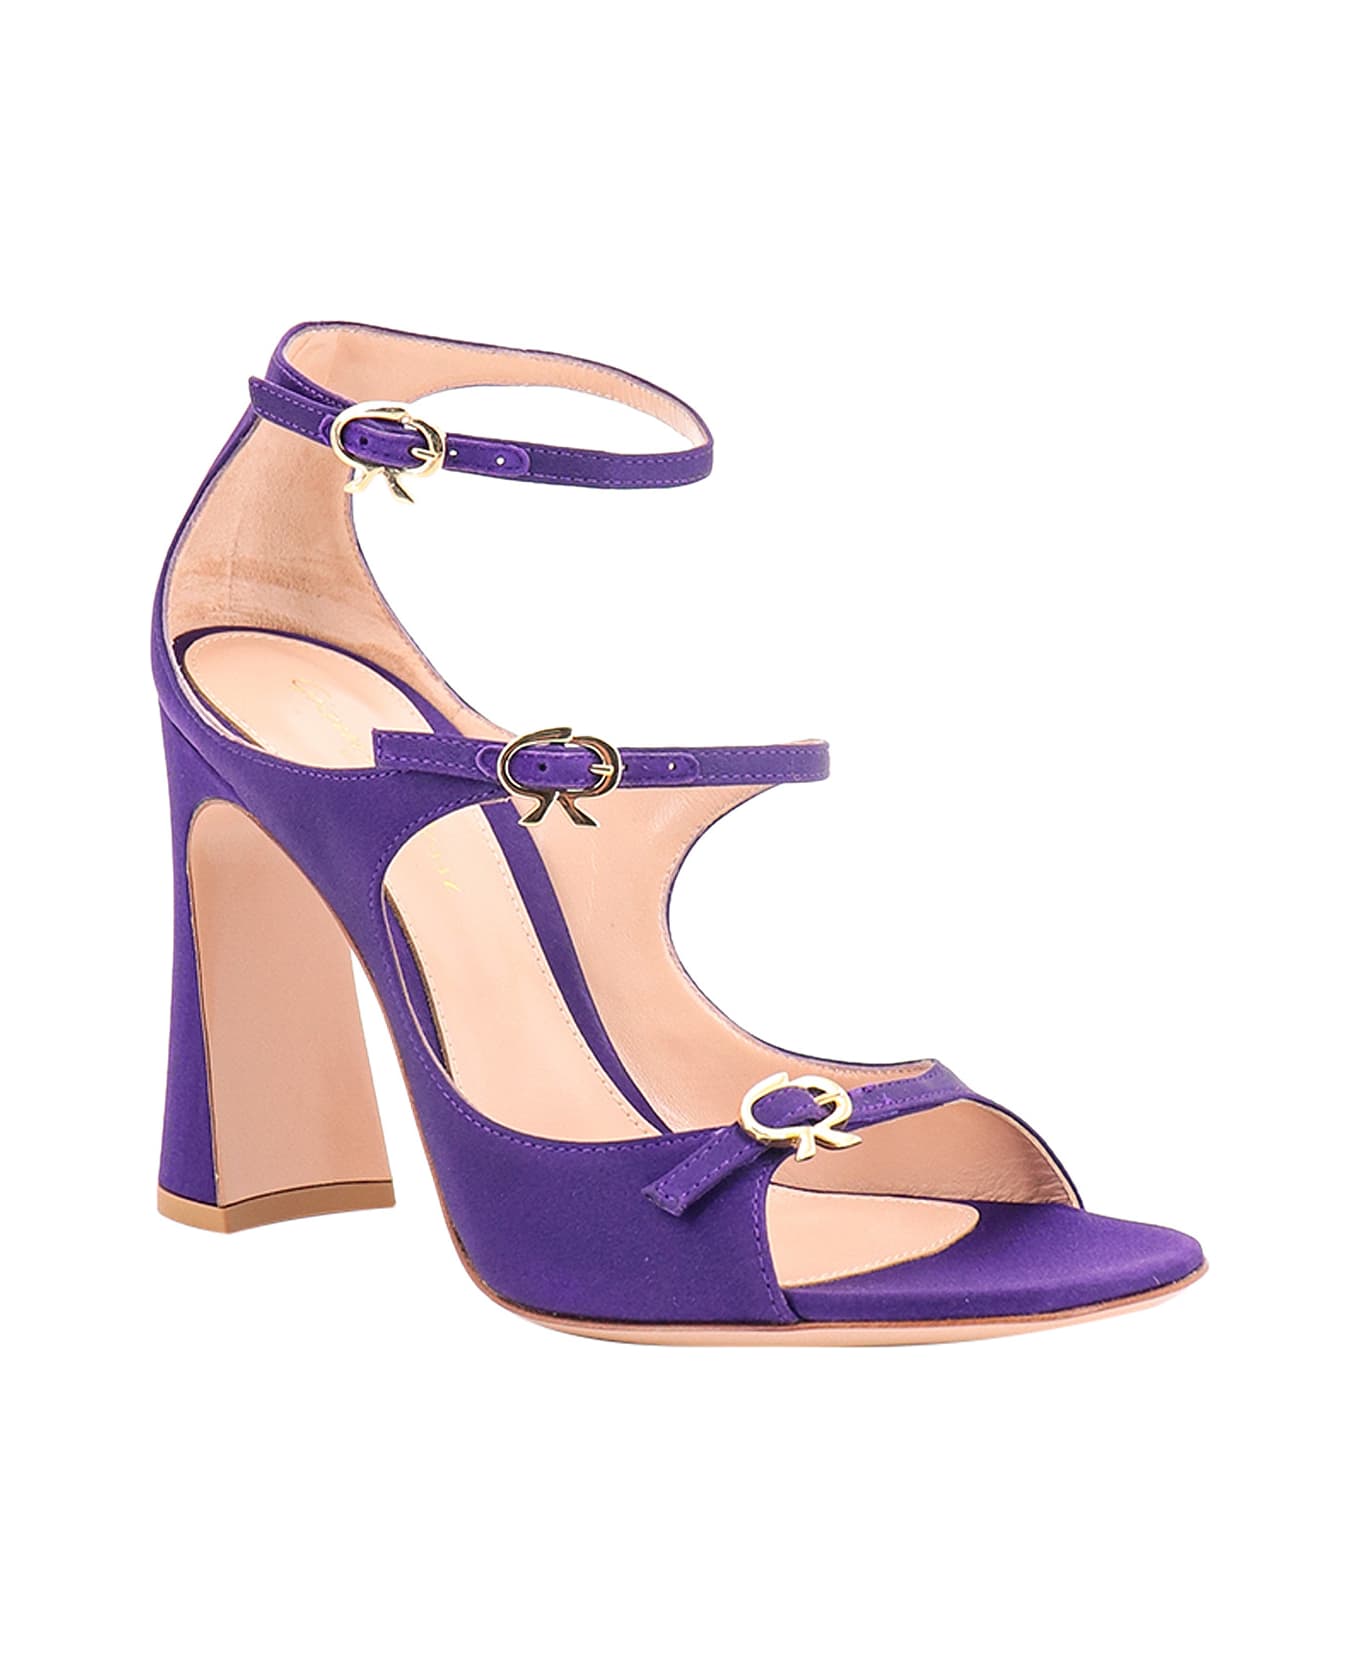 Gianvito Rossi Misty Sandals - Purple